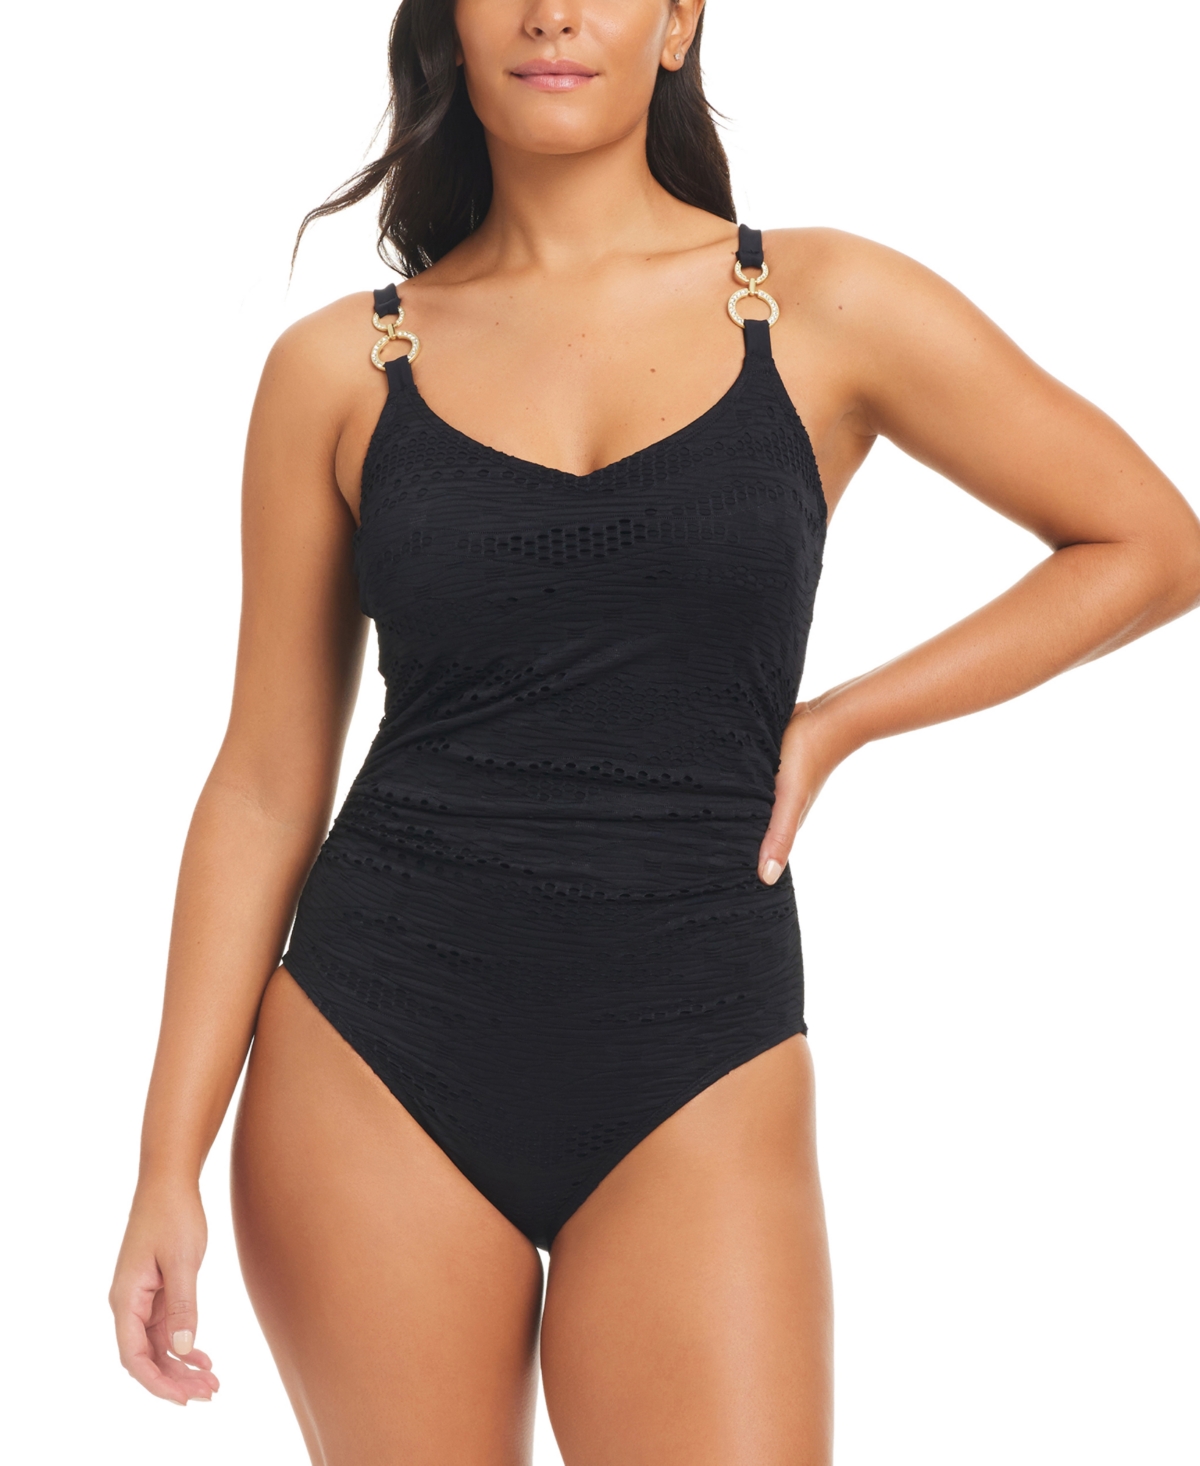 Women's Textured One-Piece Swimsuit - Black